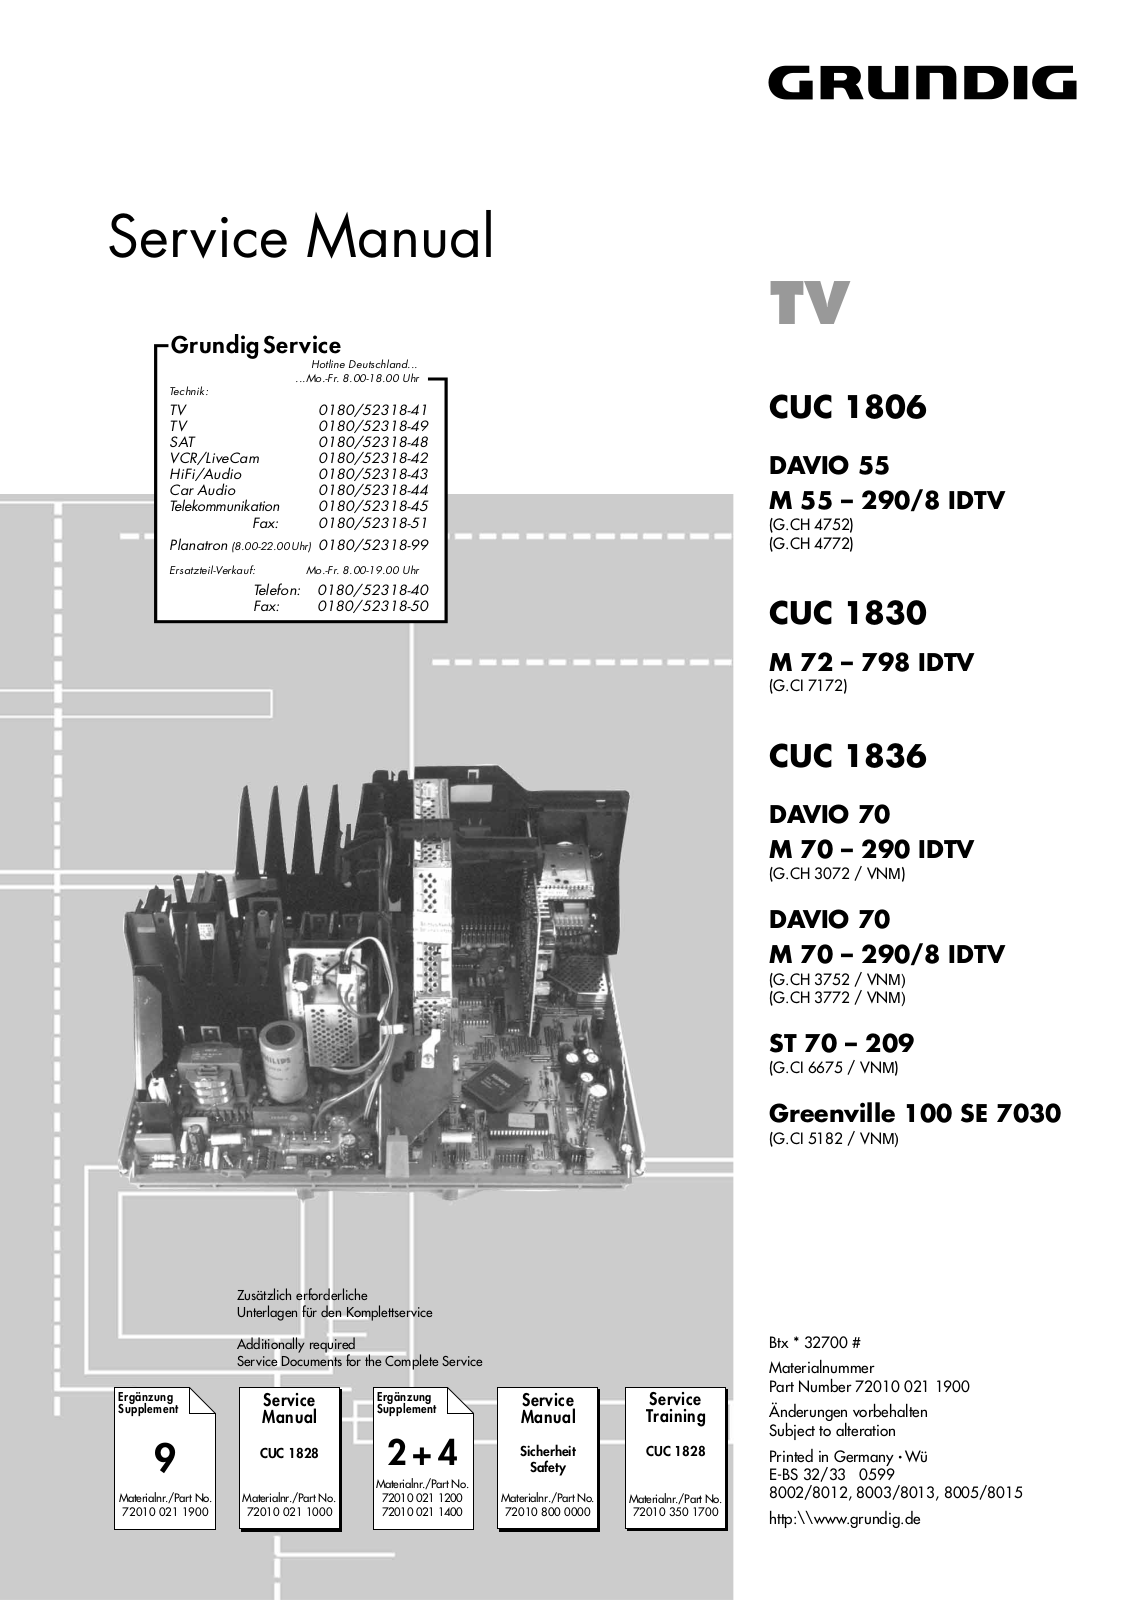 Grundig SE 7030, ST 70 – 209, M 72 – 798 IDTV Service Manual